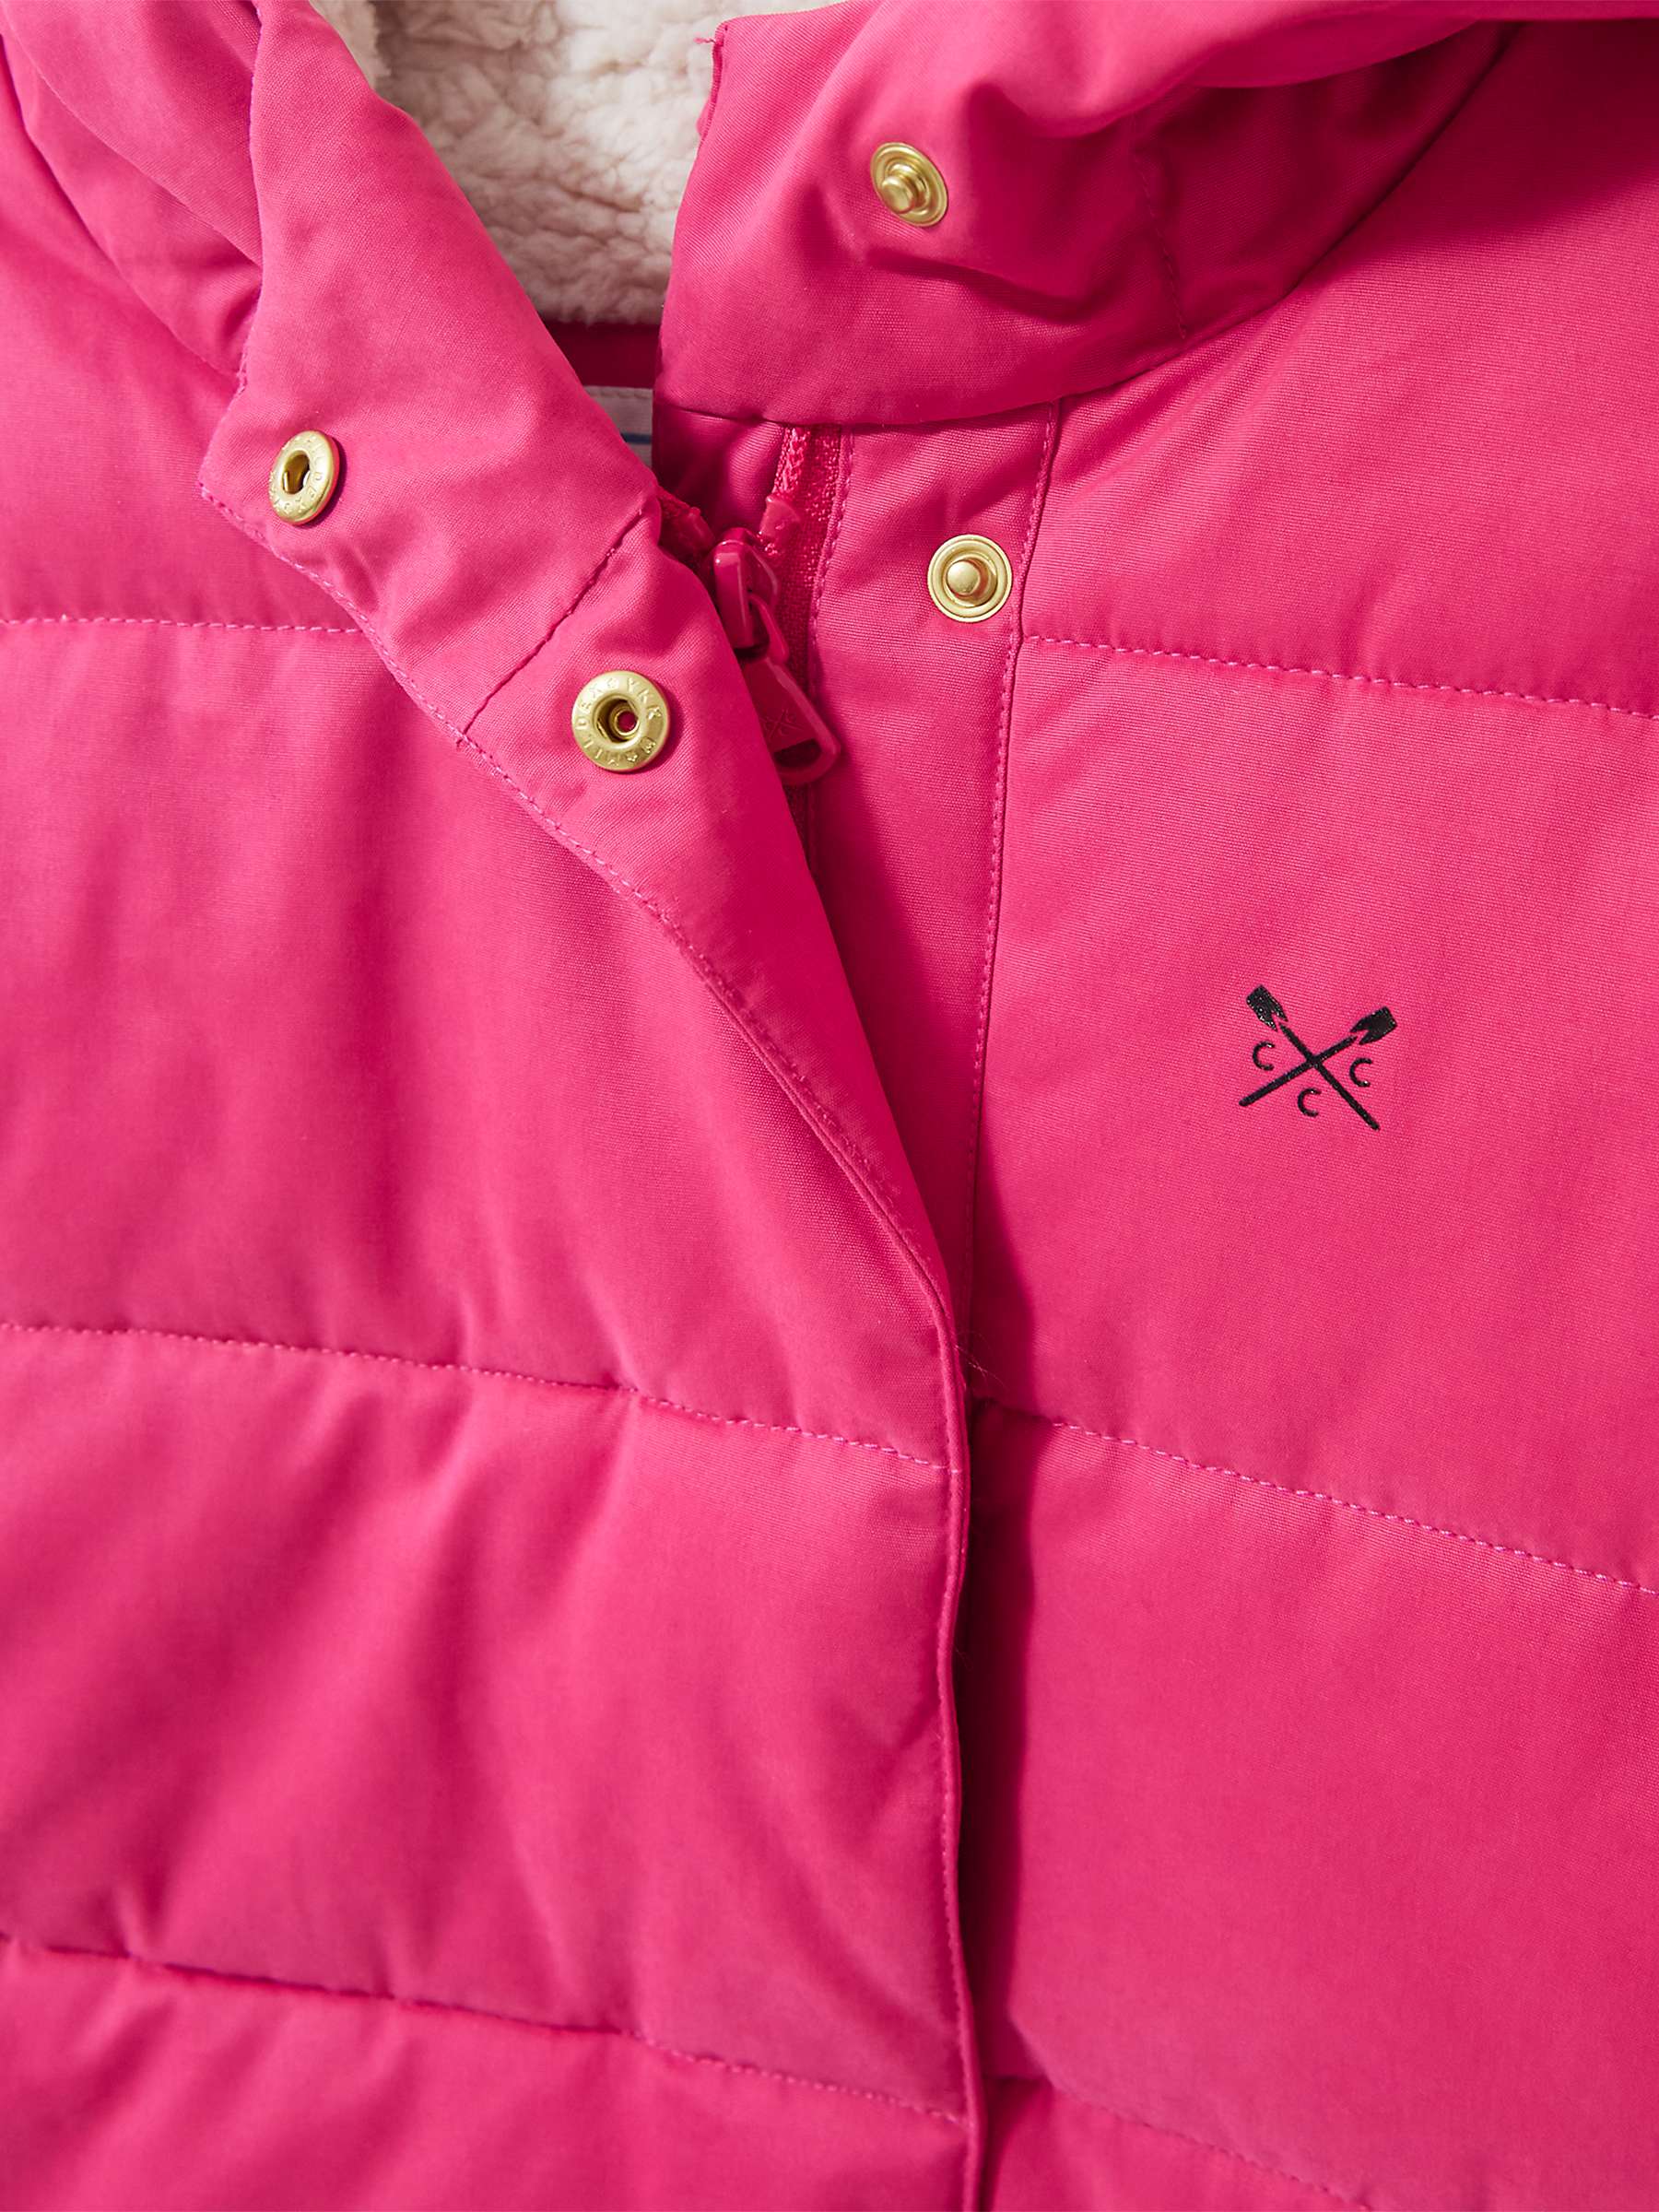 Buy Crew Clothing Kids' Long Line Duvet Coat, Mid Pink Online at johnlewis.com